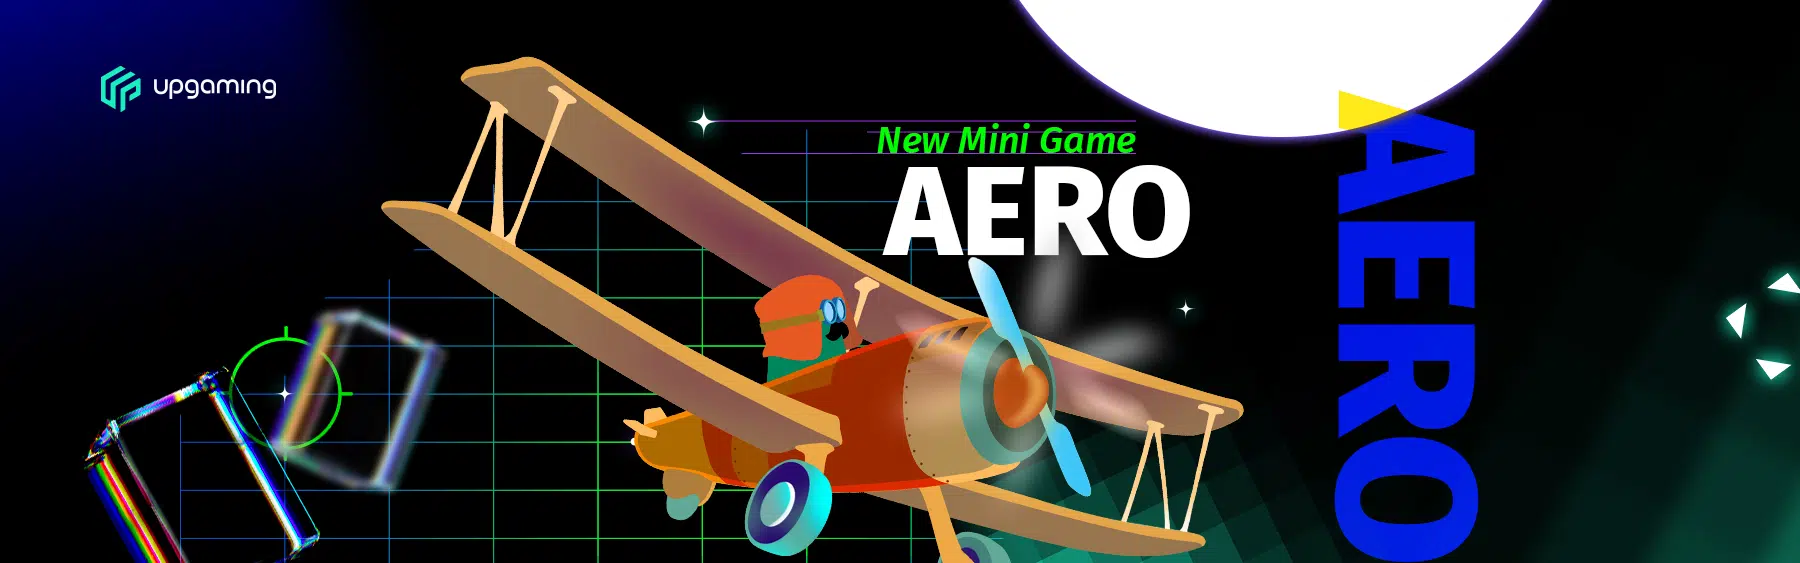 Upgaming lance un nouveau mini-jeu Aero